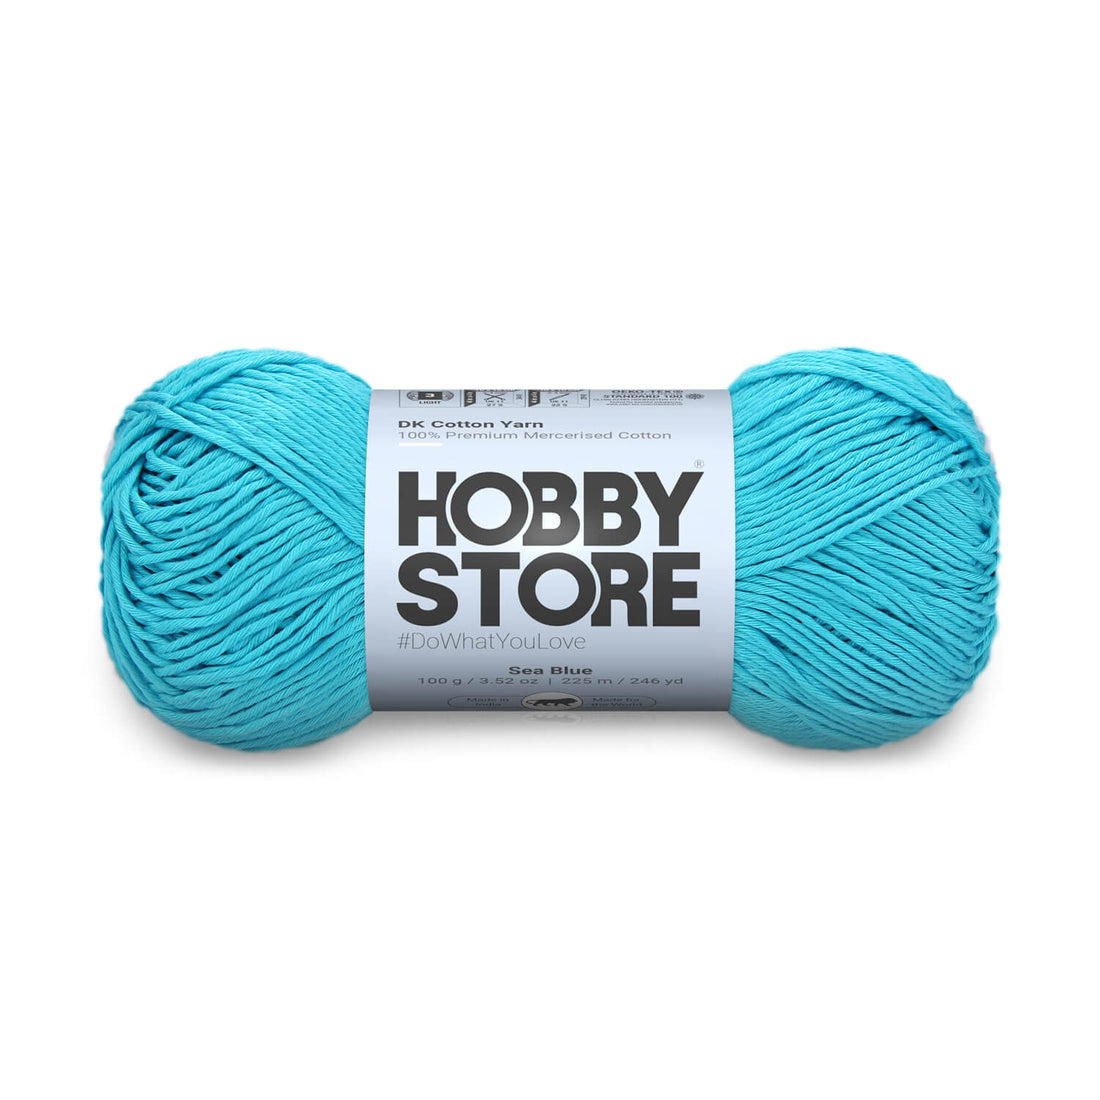 DK Mercerised Cotton Yarn by Hobby Store - Sea Blue - 341